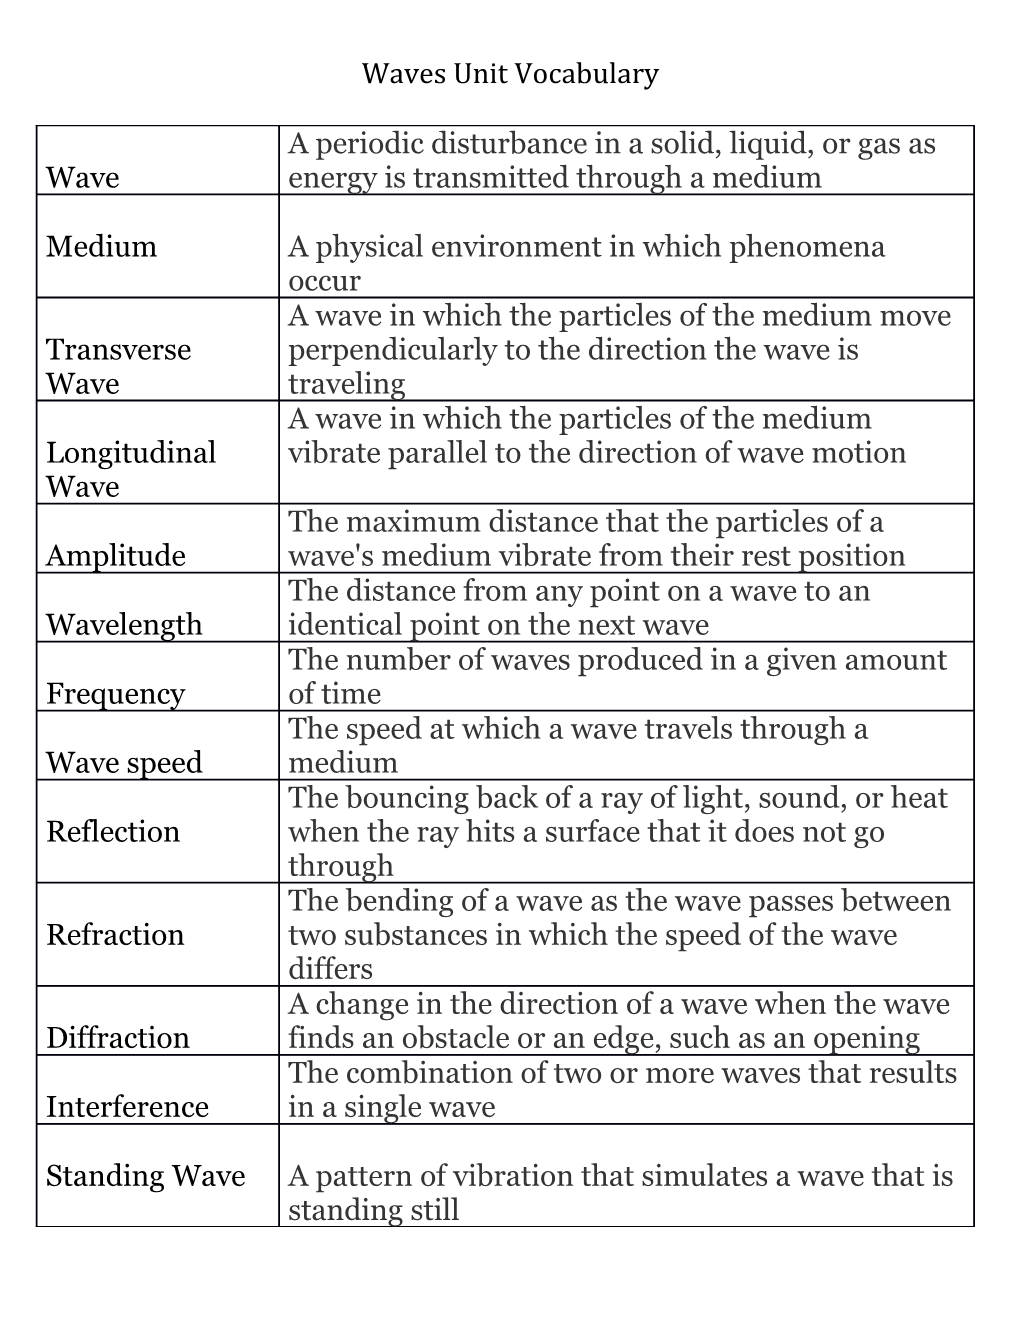 Waves Unit Vocabulary